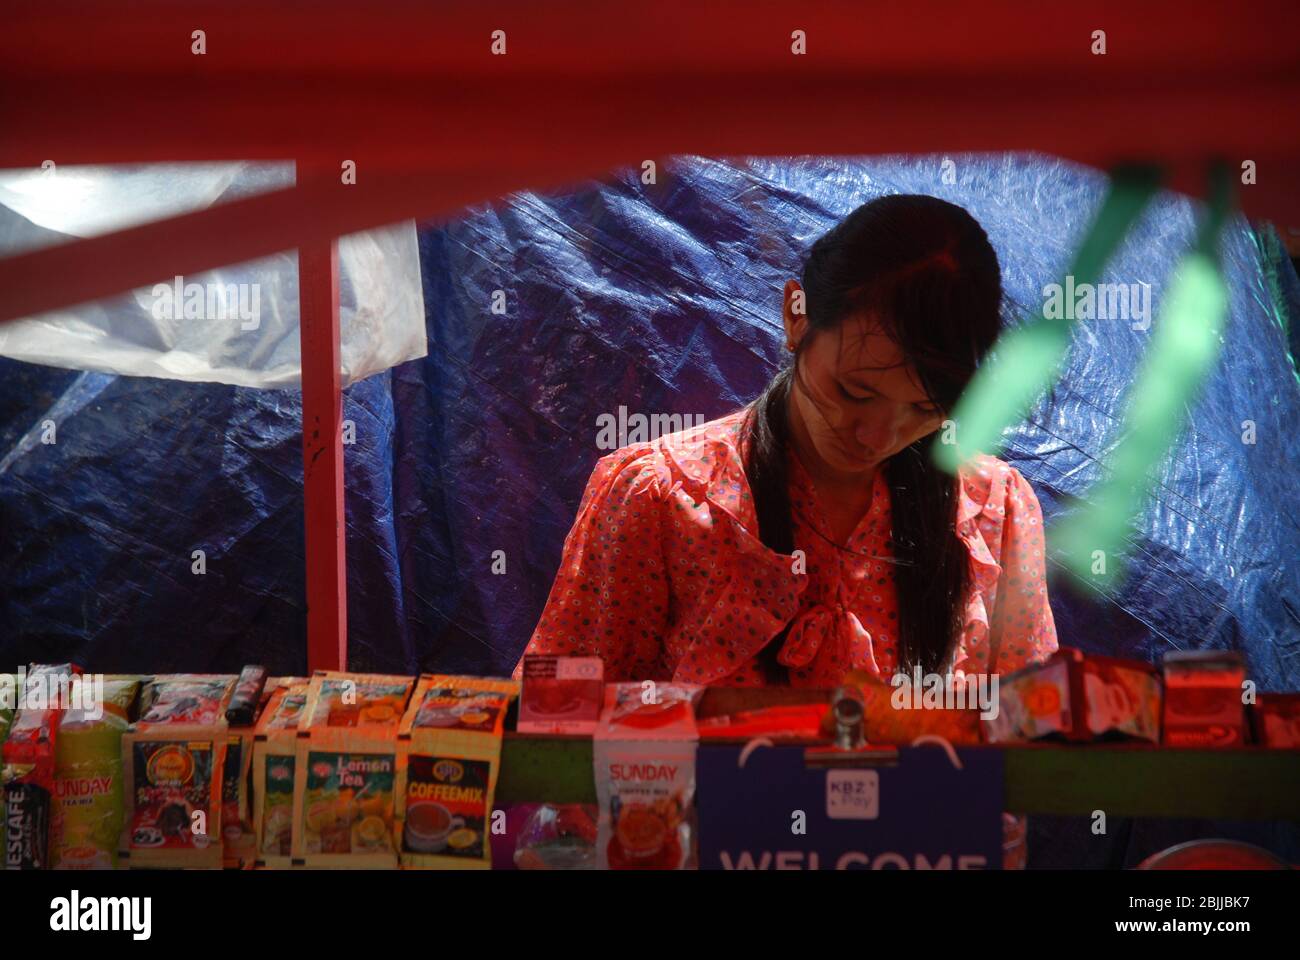 Lady selling small food items, Yangon, Myanmar, Asia. Stock Photo